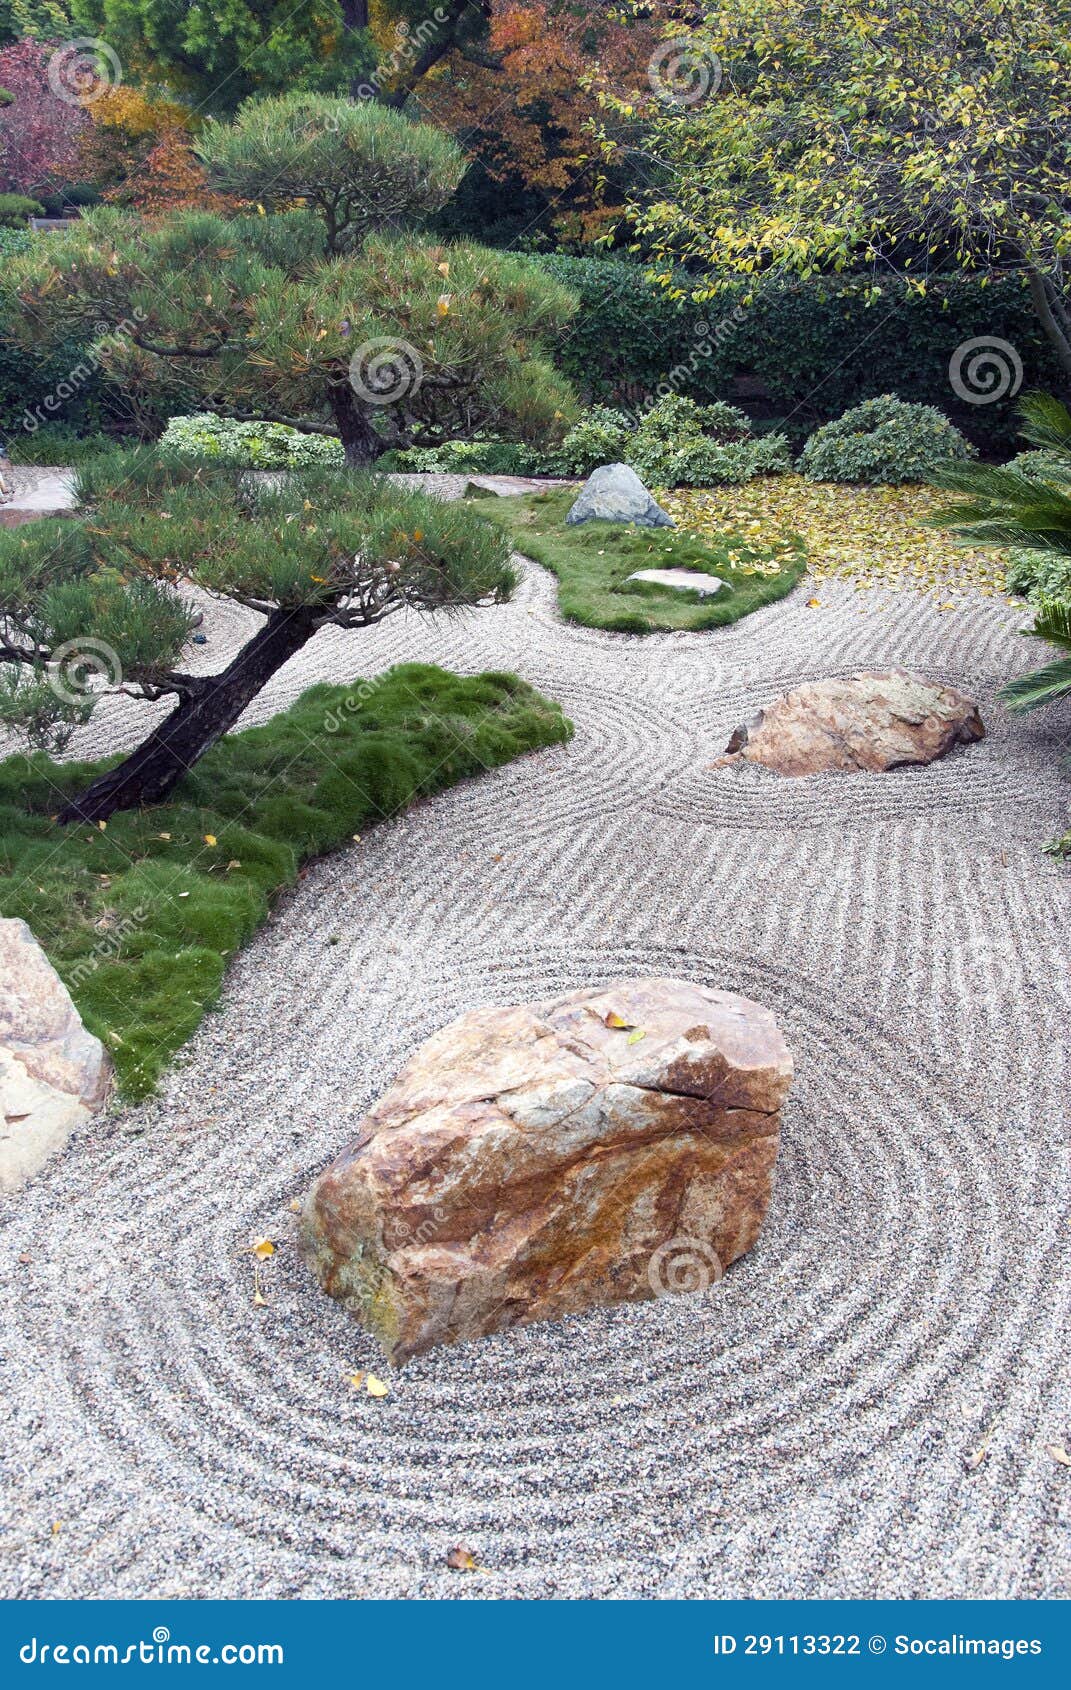 An example of karesansui or Japanese dry landscape gardening.